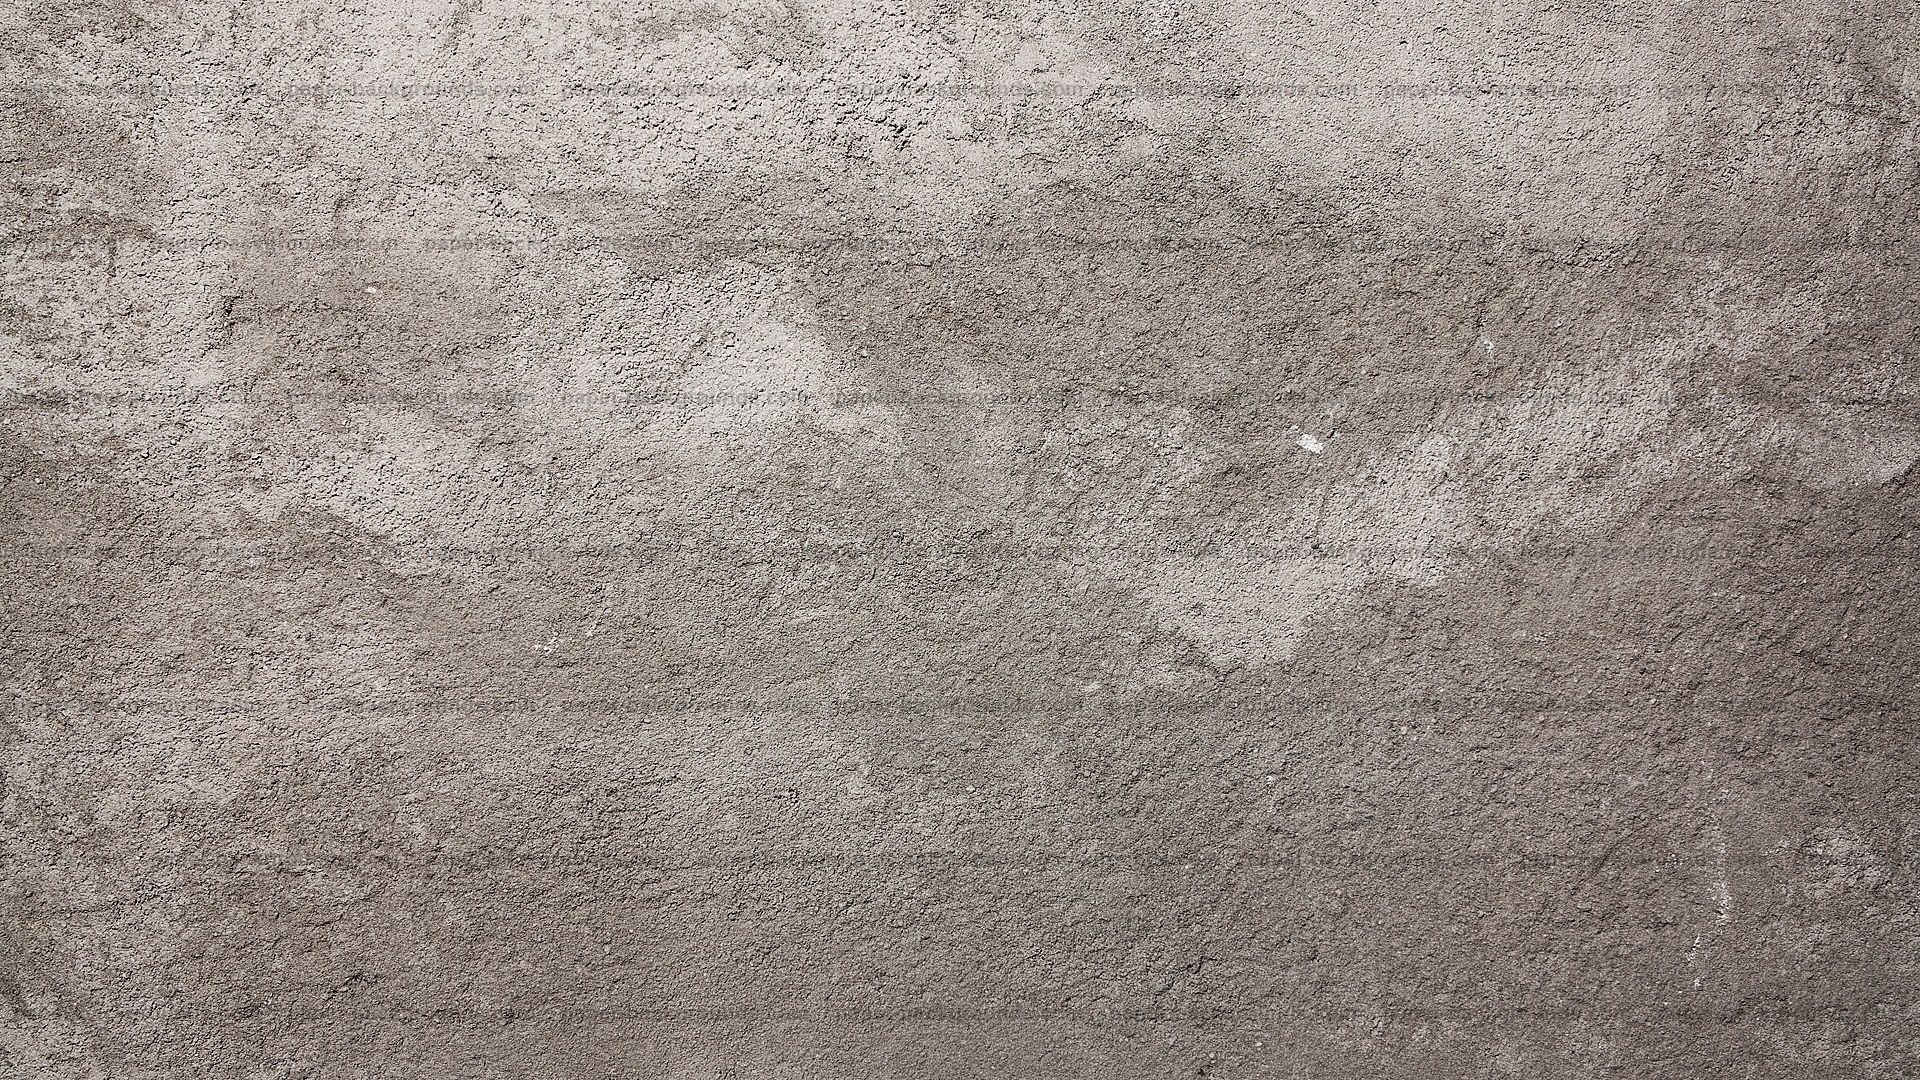 Vintage Concrete Wall Background Texture HD | textures + patterns ...